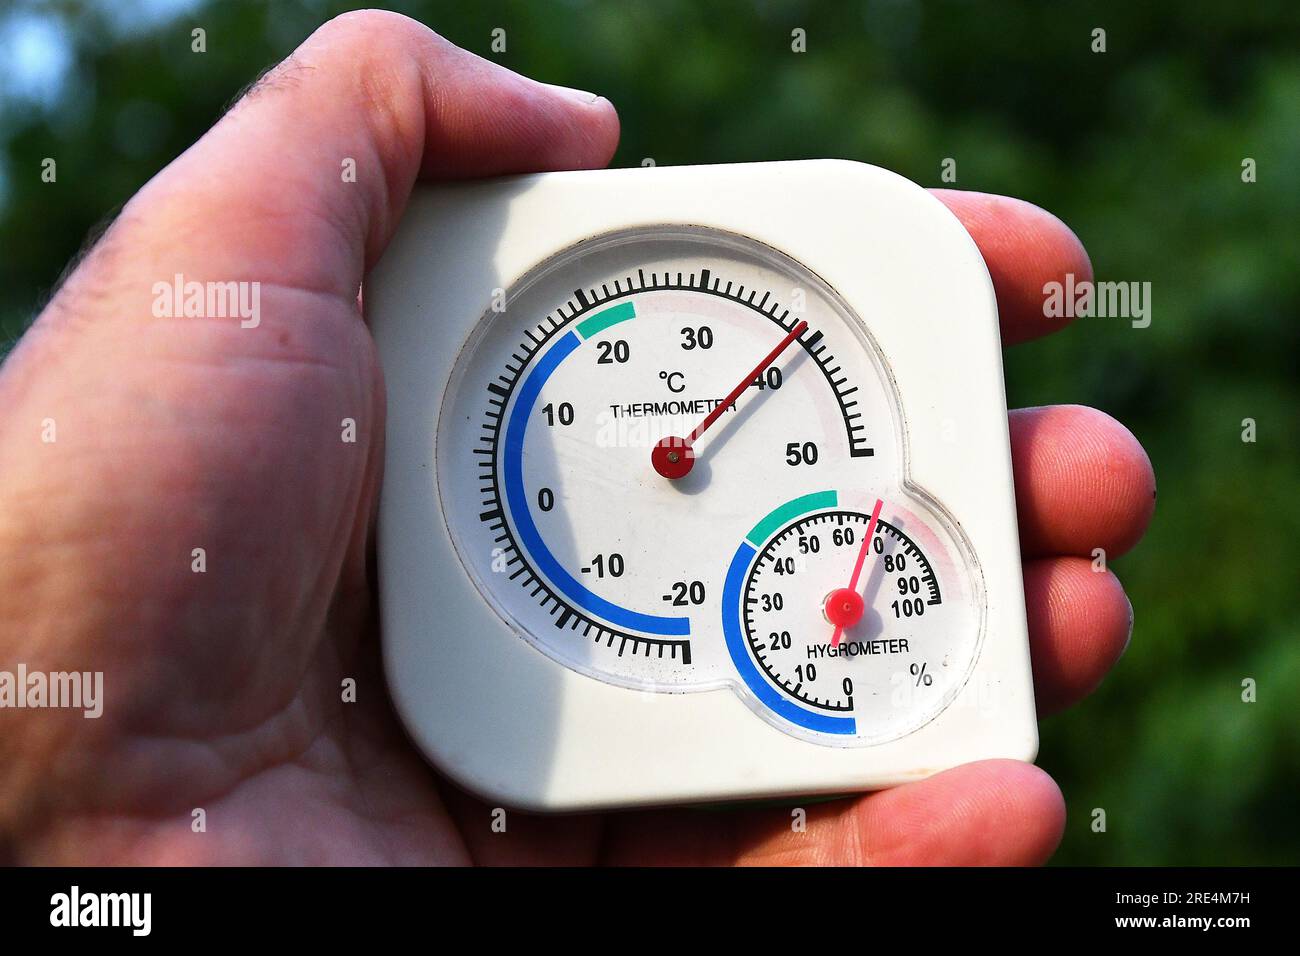 https://c8.alamy.com/comp/2RE4M7H/illustration-thermometer-hot-heat-tropical-temperature-tropics-39-degrees-weather-summer-extreme-heat-kerberos-charon-ctk-photopetr-svanc-2RE4M7H.jpg